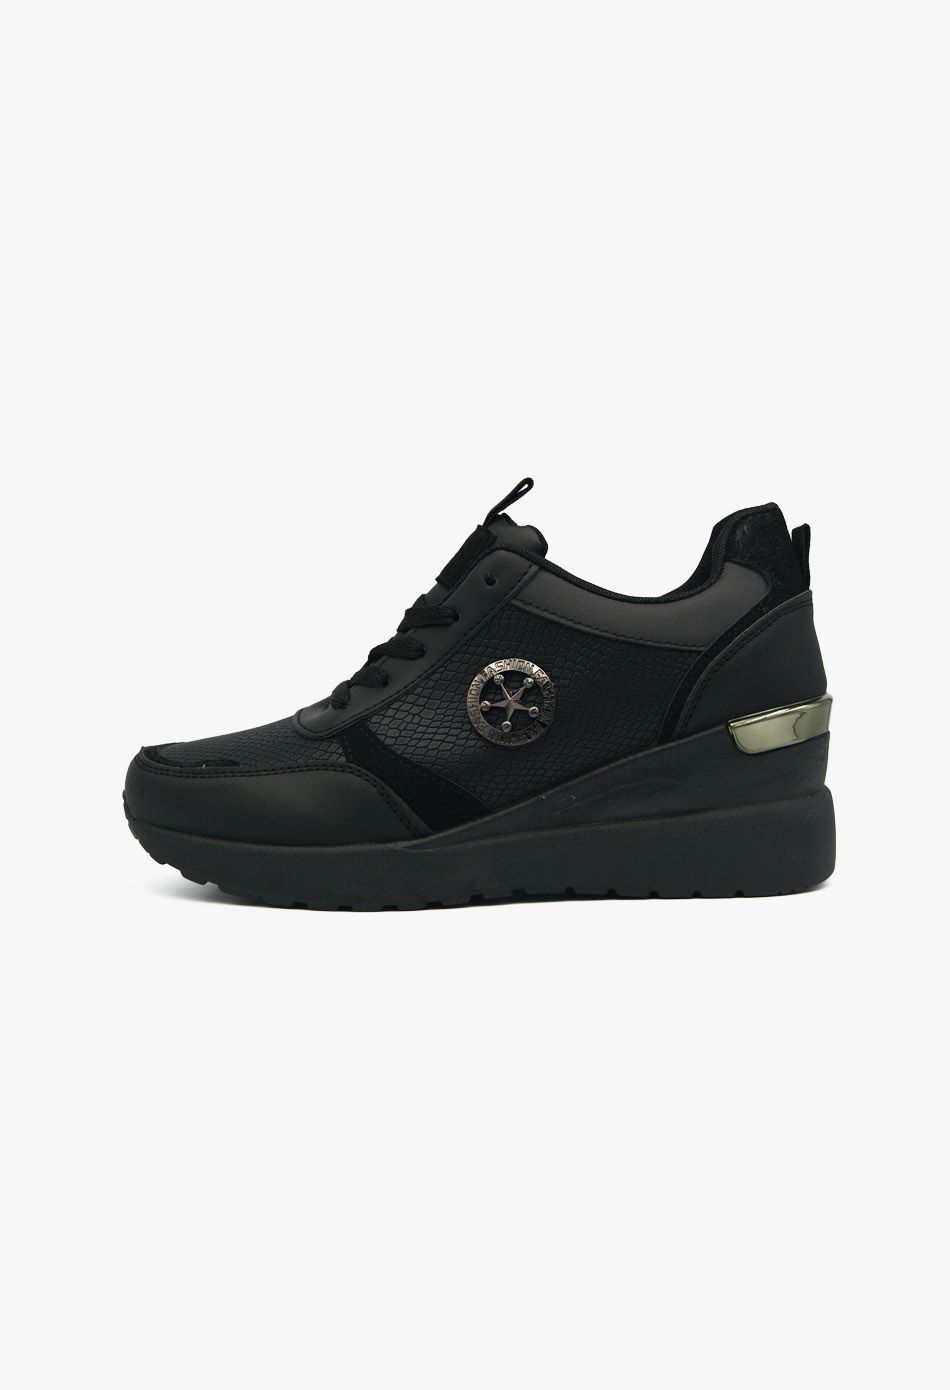 Sneakers με Πλατφόρμα Μαύρο / OX2551-black Χαμηλά Παπούτσια joya.gr